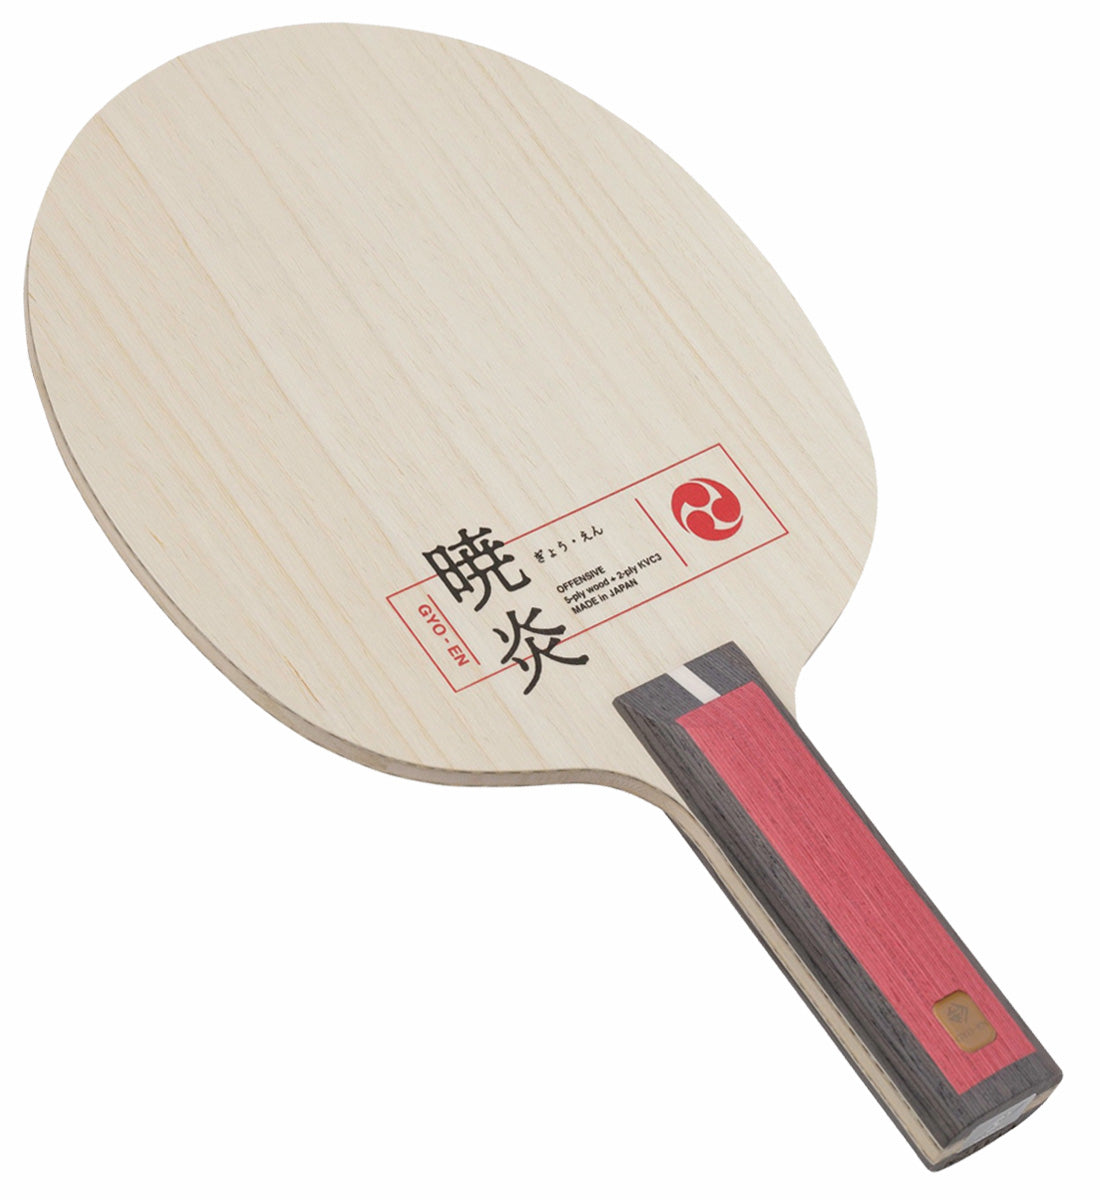 Nittaku Gyo-En - Offensive Table Tennis Blade